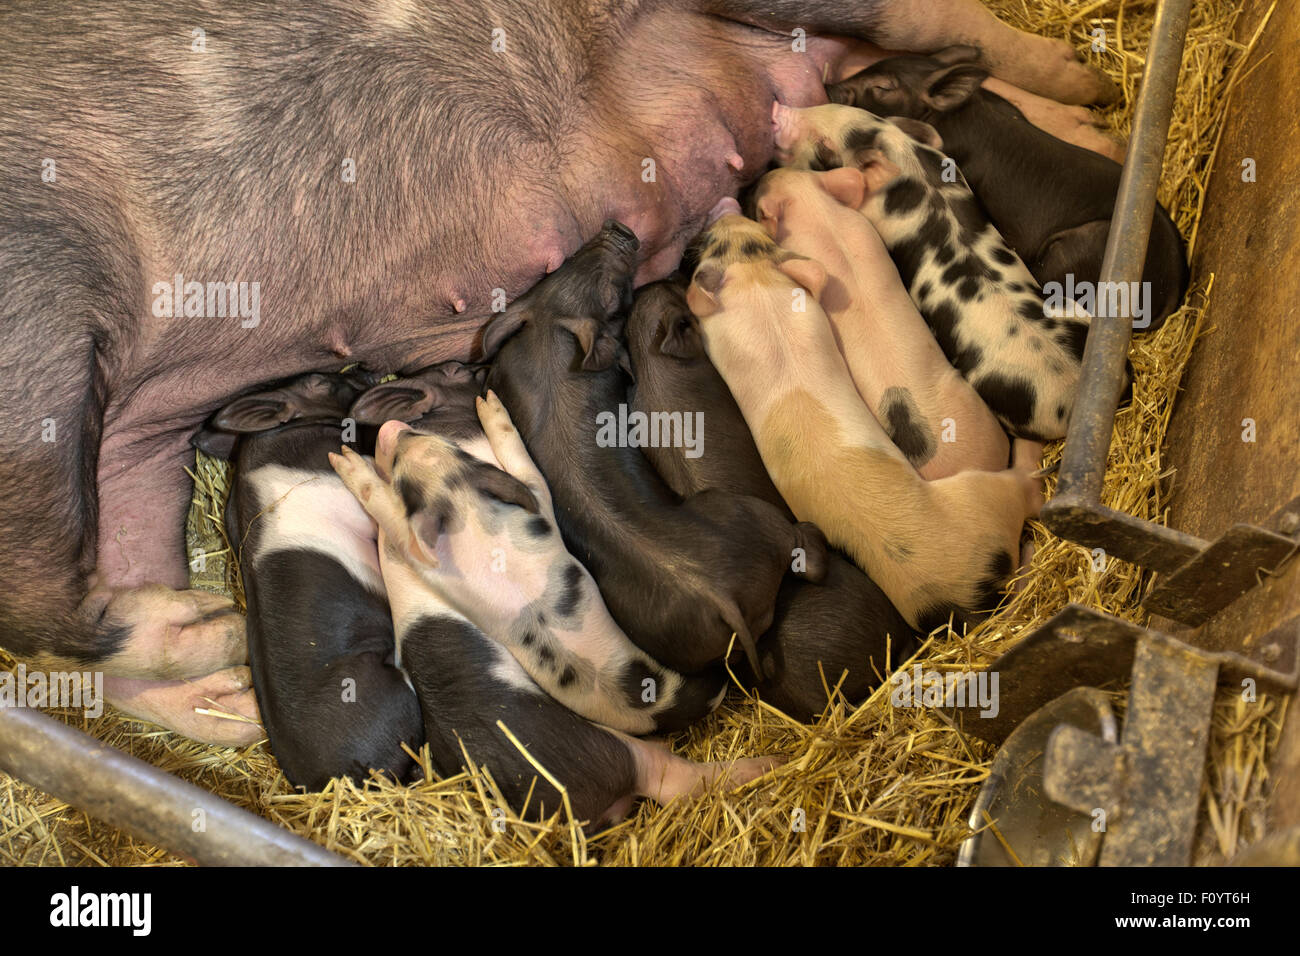 Berkshire Yorkshire X,  2 week old piglets sleeping straw-bedded pen. Stock Photo